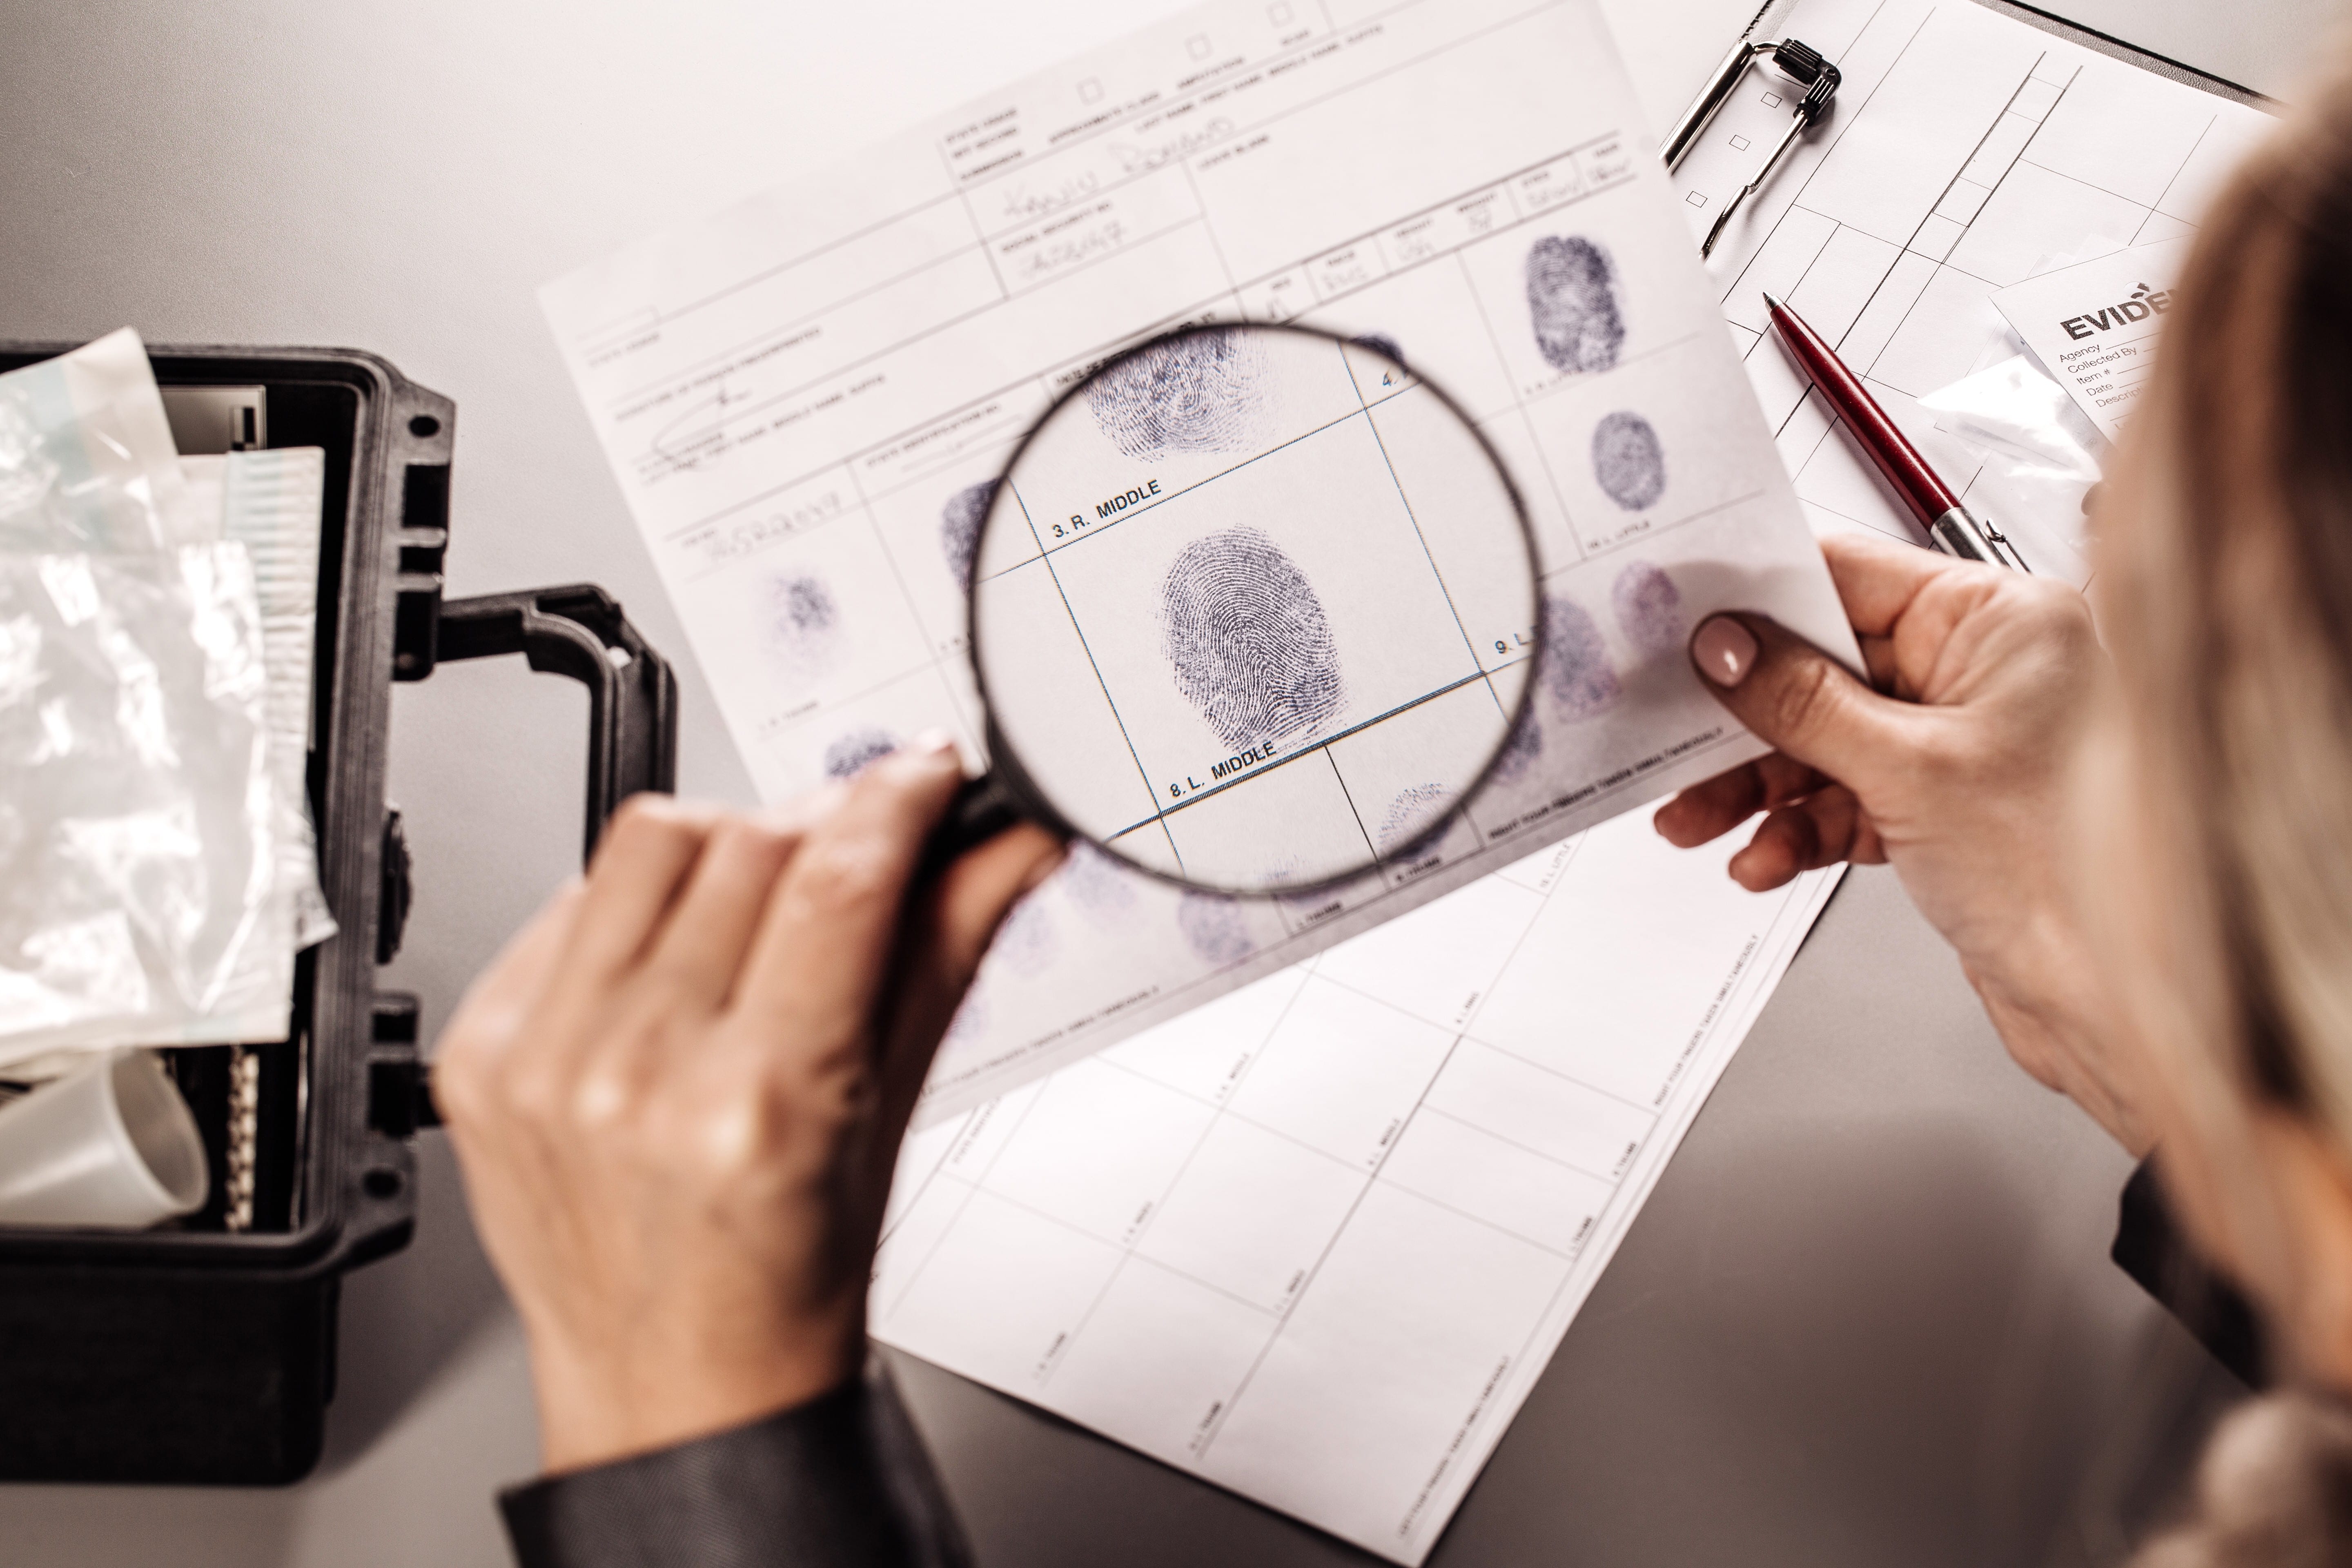 Criminology Expert Through a Magnifying Glass Looking at a Fingerprint